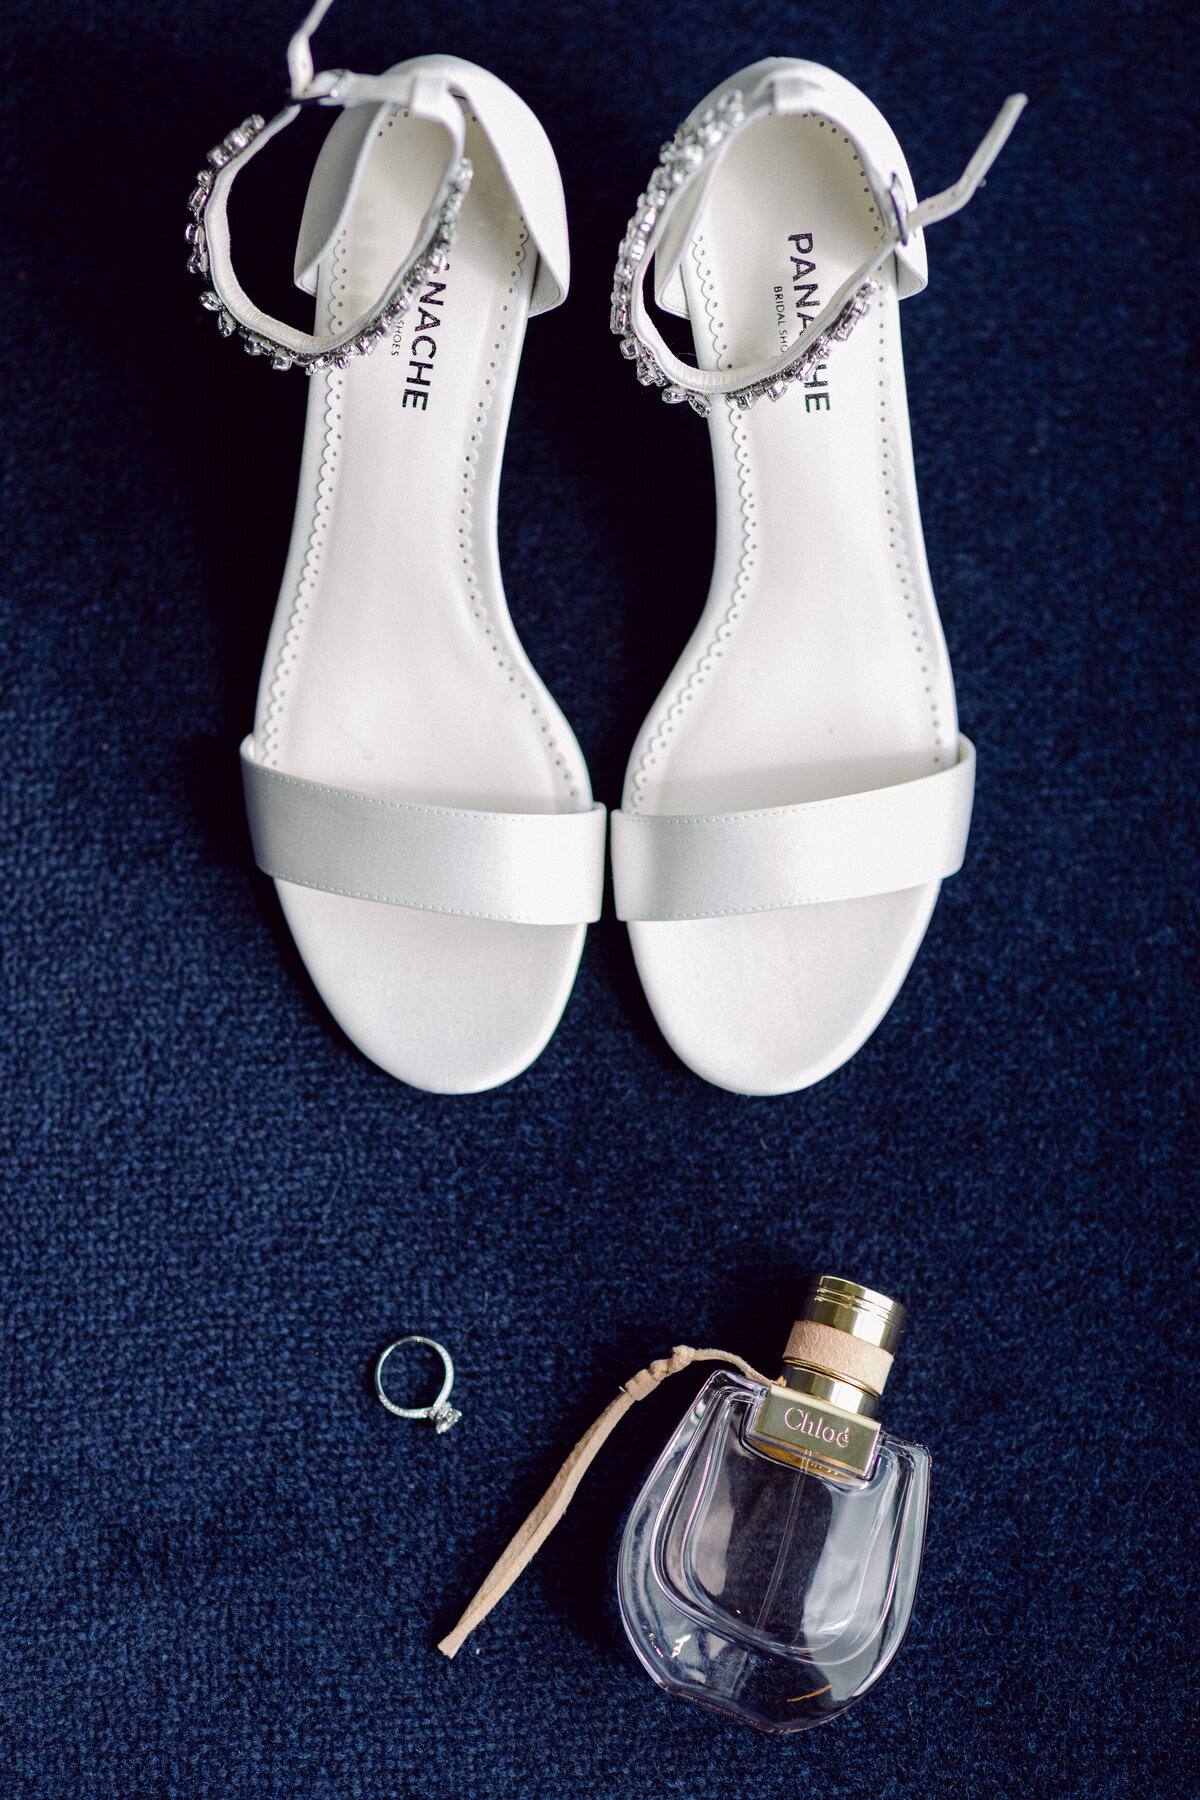 Panache Wedding Shoes + Engagement Ring + Wedding Perfume